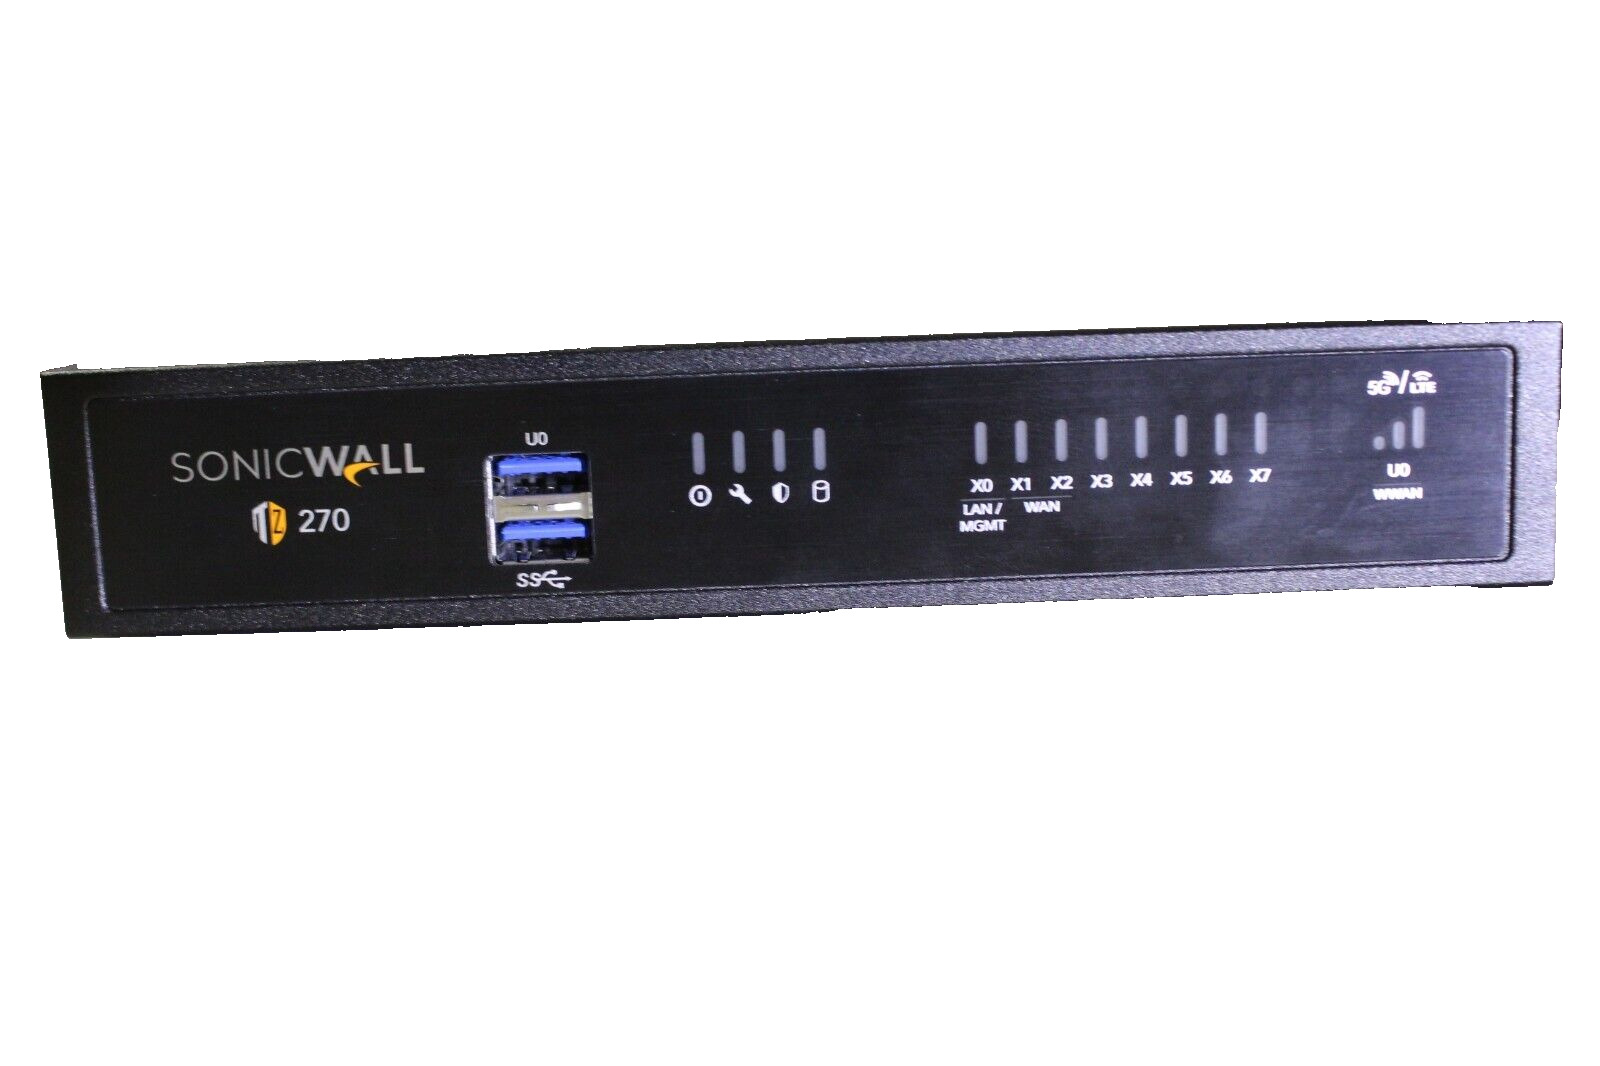 Sonicwall TZ270 Model APL57-100 used firewall appliance